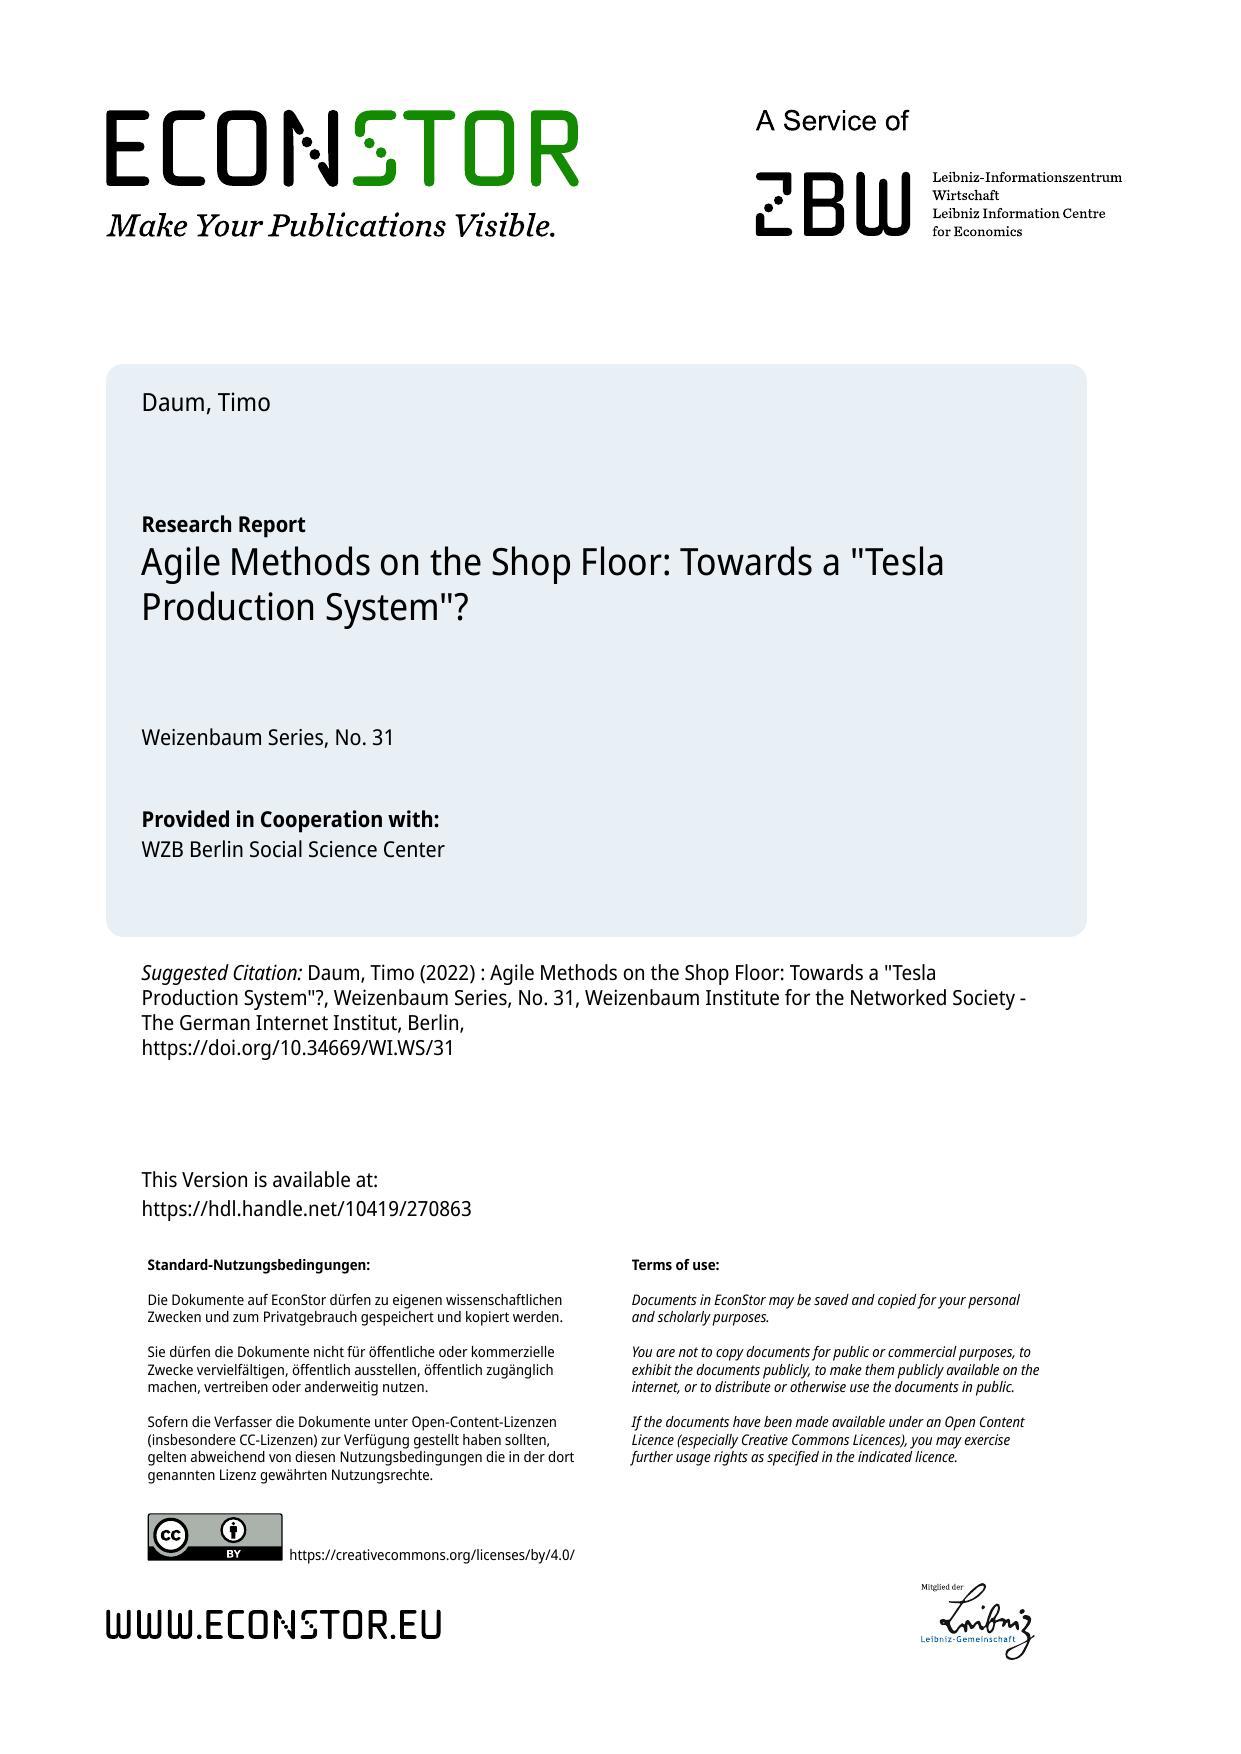 agile-methods-on-the-shop-floor-towards-a-tesla-production-system.pdf